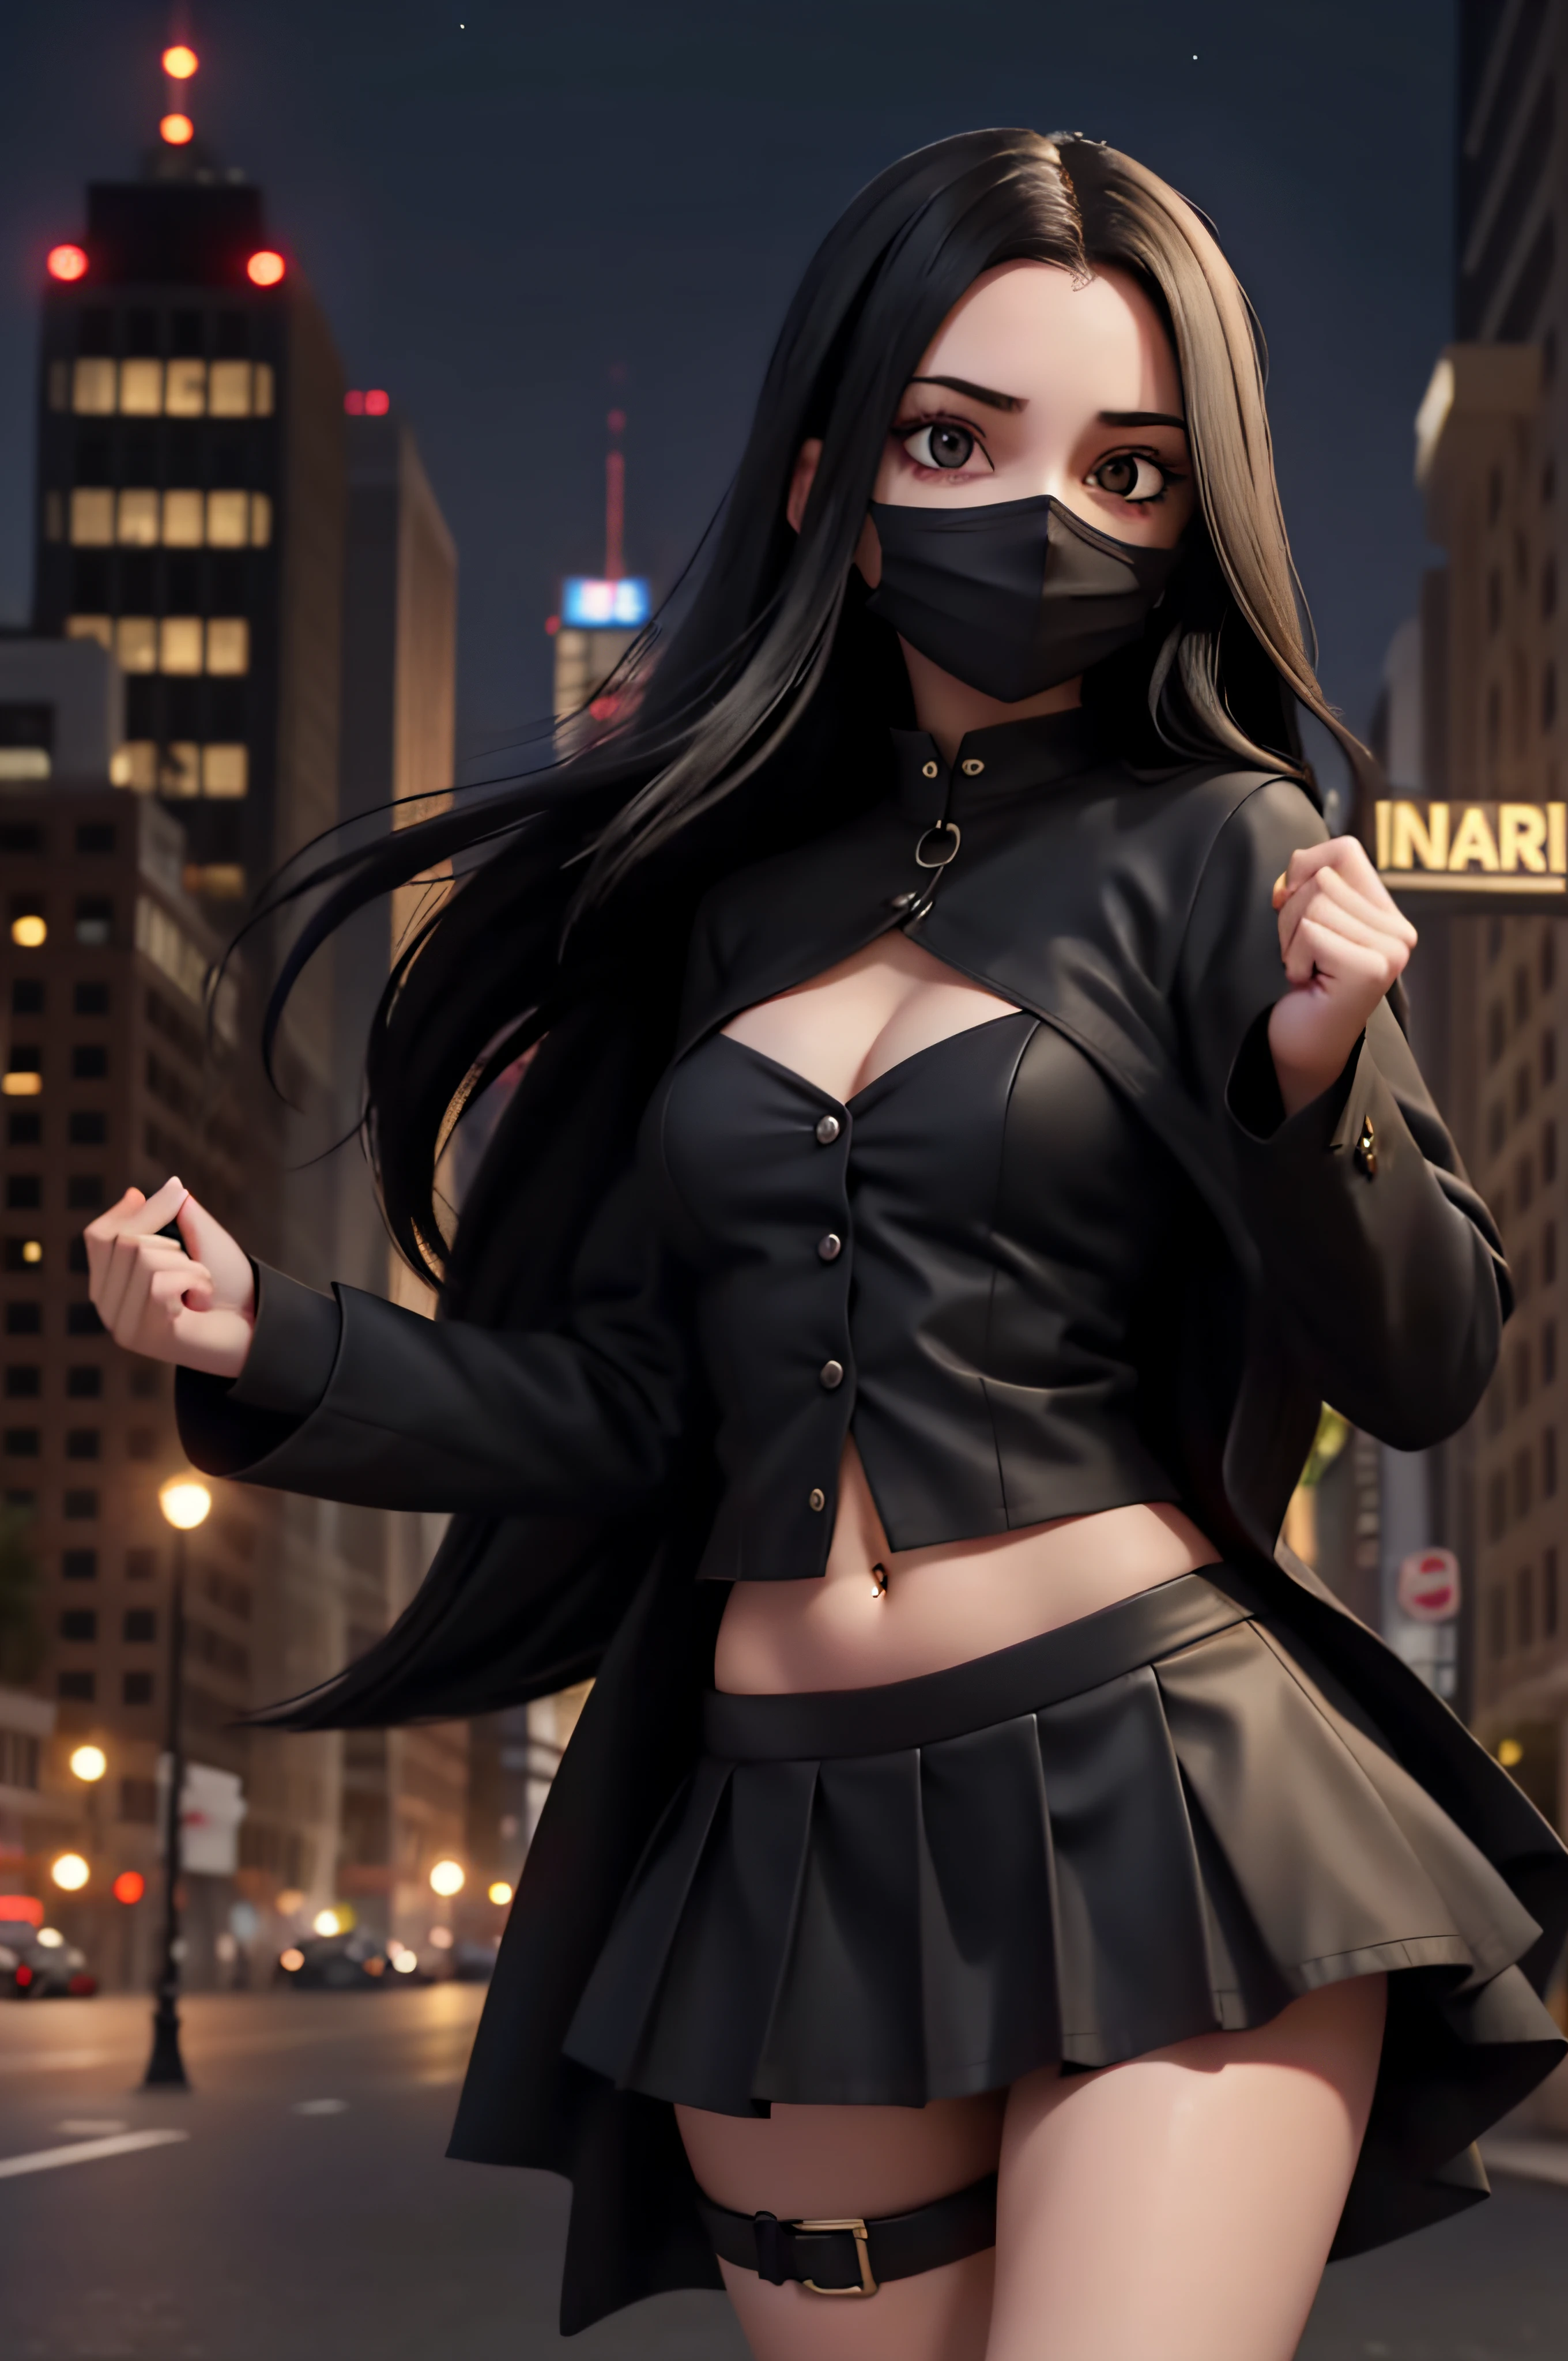 1 girl, 18 years old, long black hair, ghostface mask, night city, navel piercing, black skirt